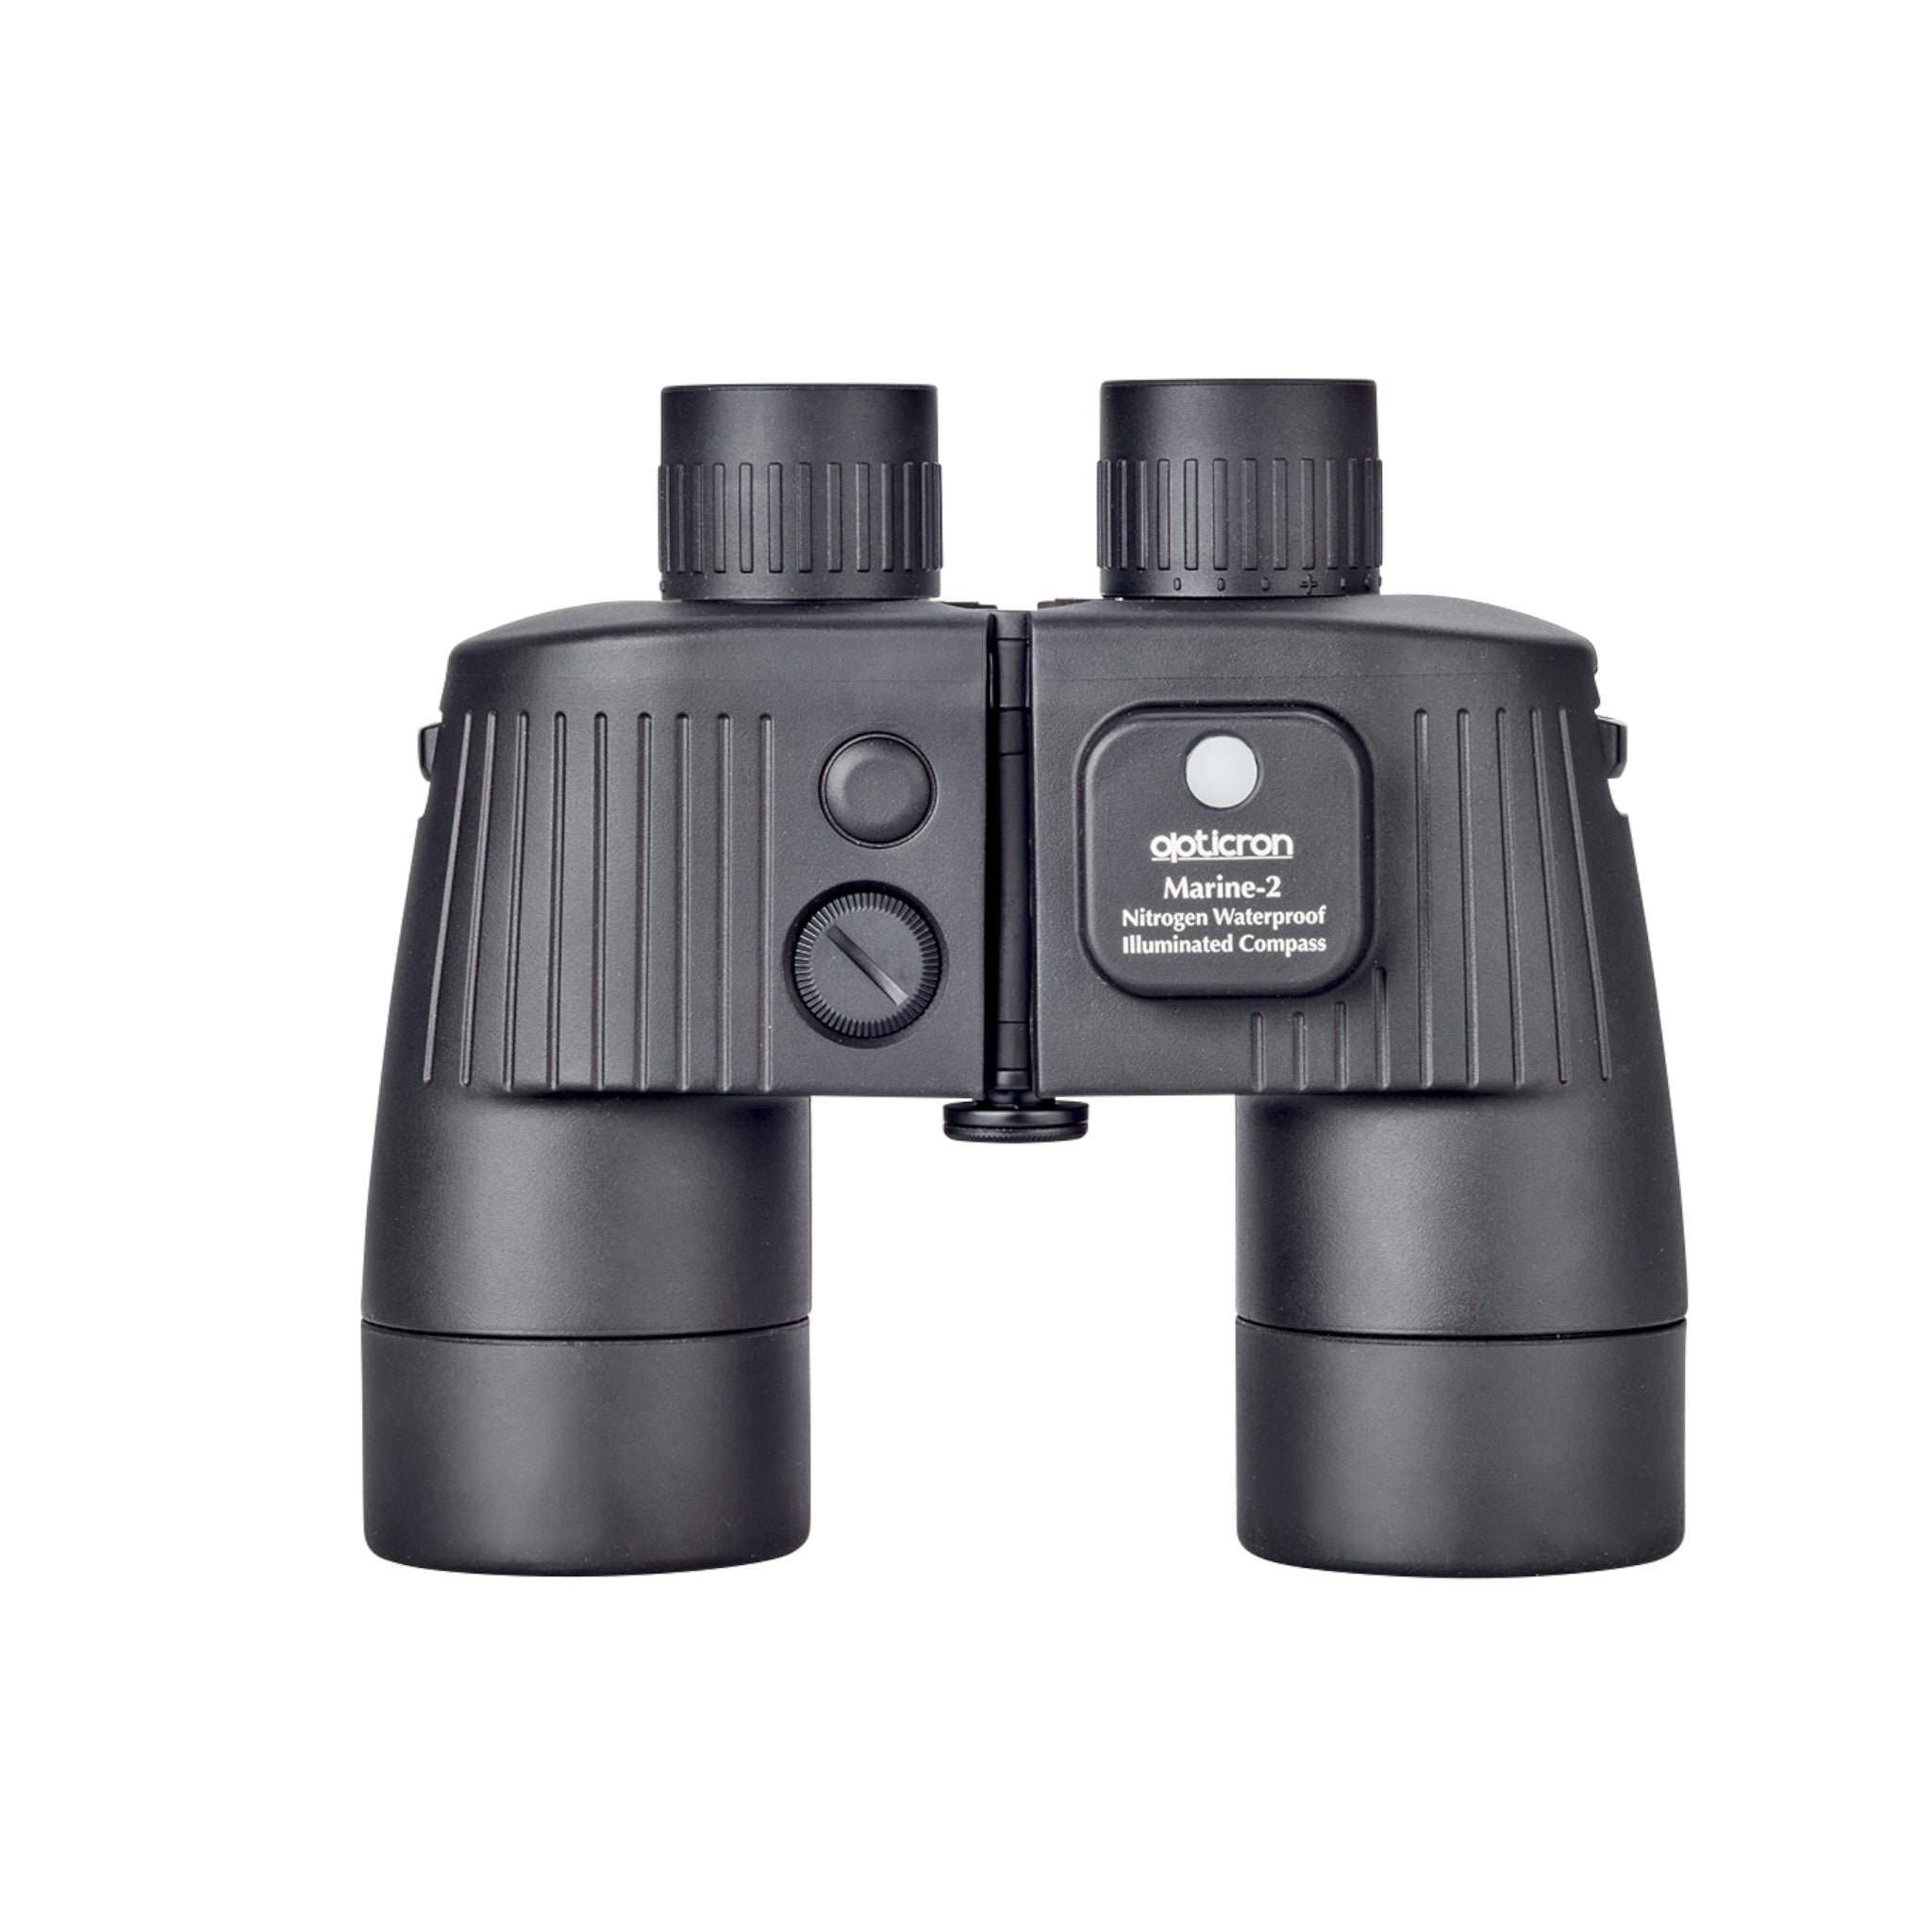 Opticron Marine 2 7x50 IC Binoculars (Black)